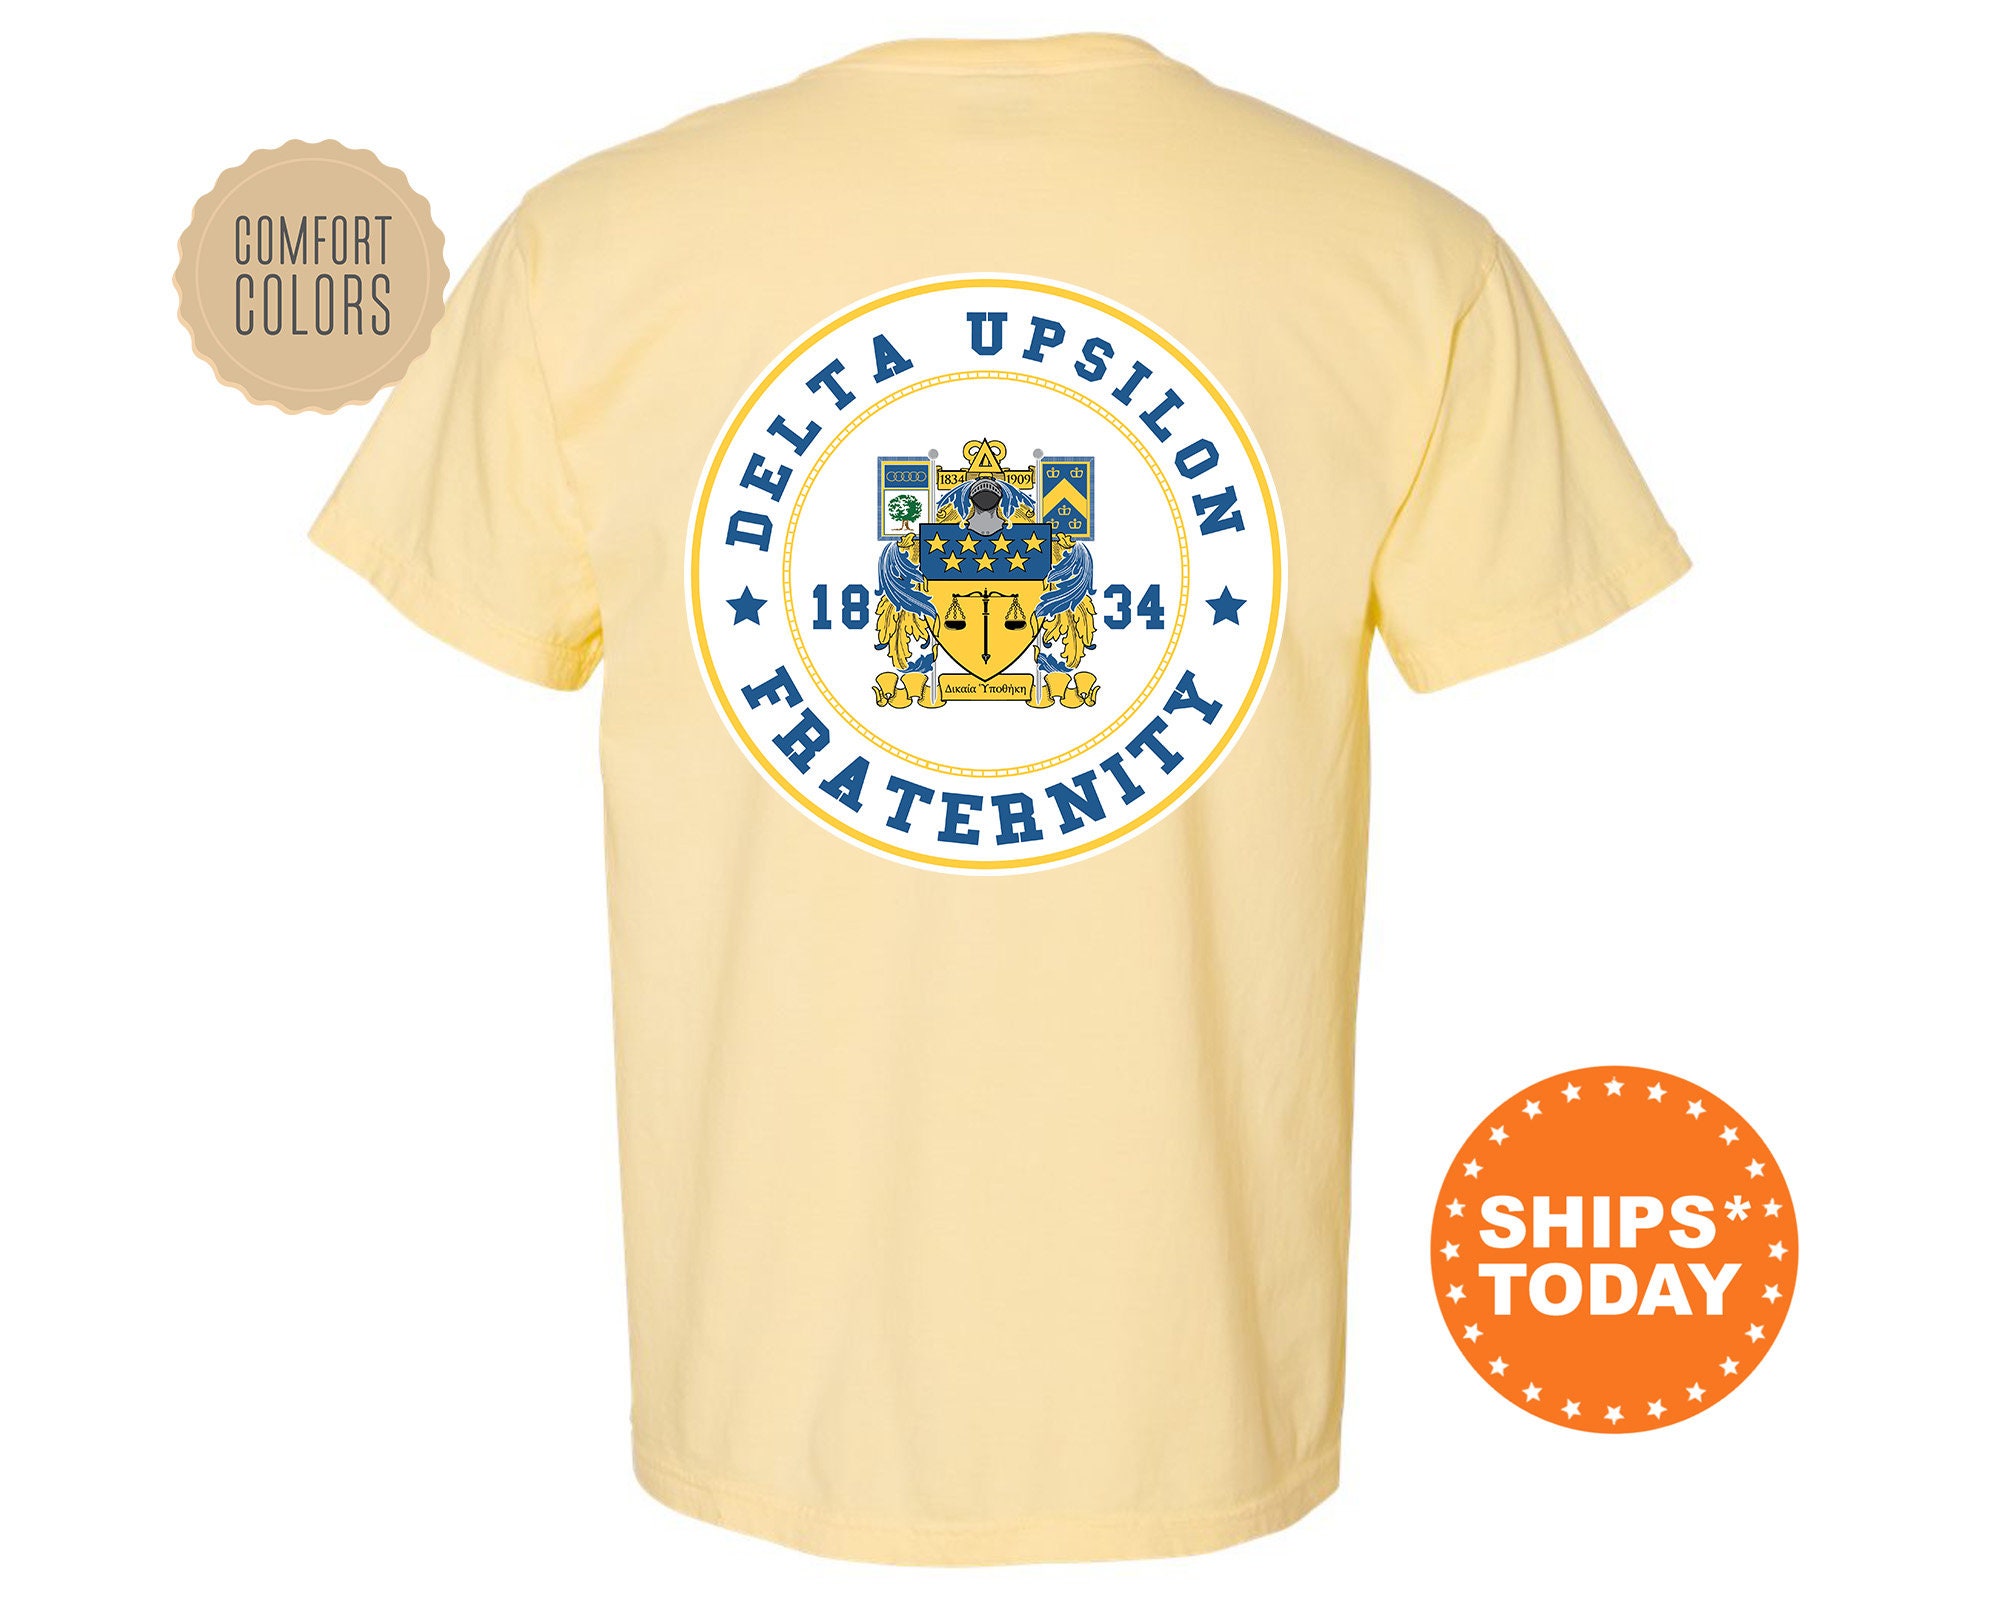 DISCOUNT-Delta Upsilon Fraternity Crest - Shield Slugger Baseball